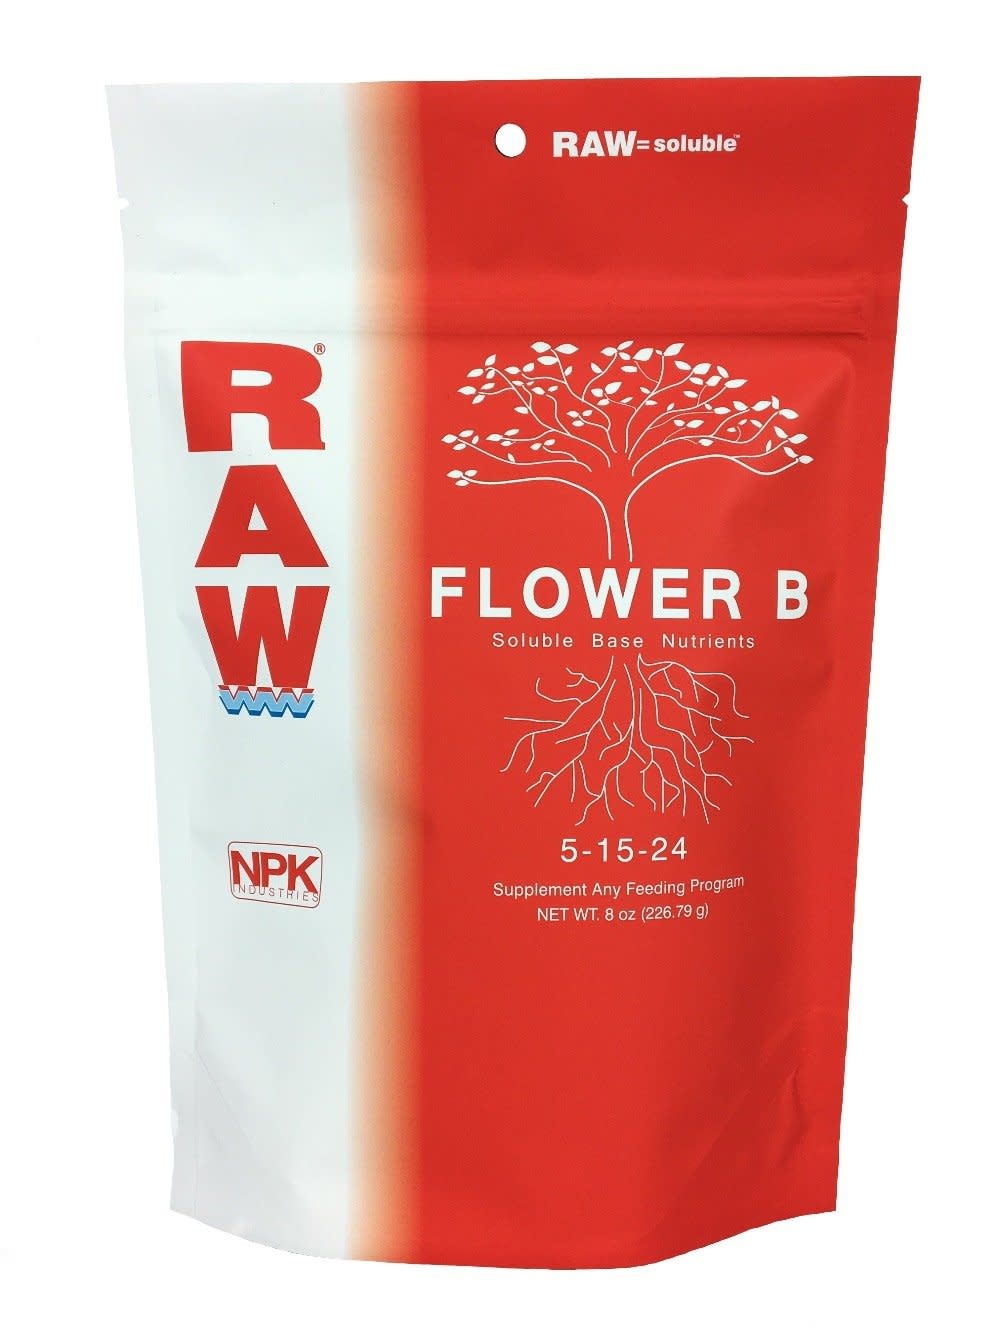 NPK Industries Flower B